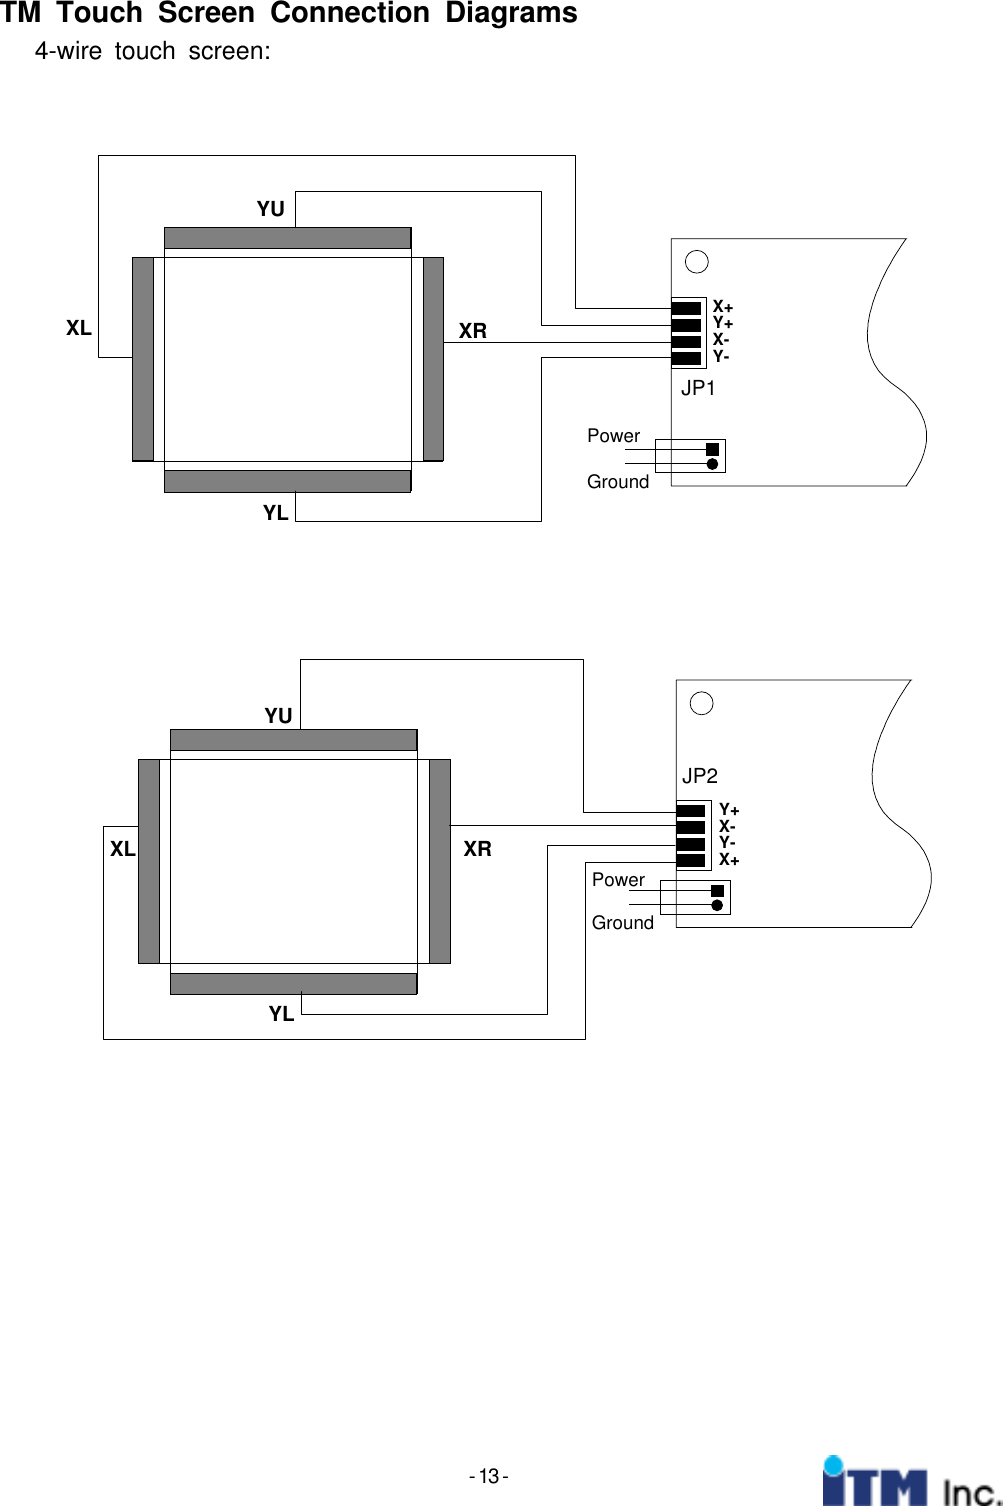 - 13 -TM Touch Screen Connection Diagrams4-wire touch screen:PowerGroundXLYLXRYUX+Y+X-Y-JP1PowerGroundXLYLXRYUY+X-Y-X+JP2